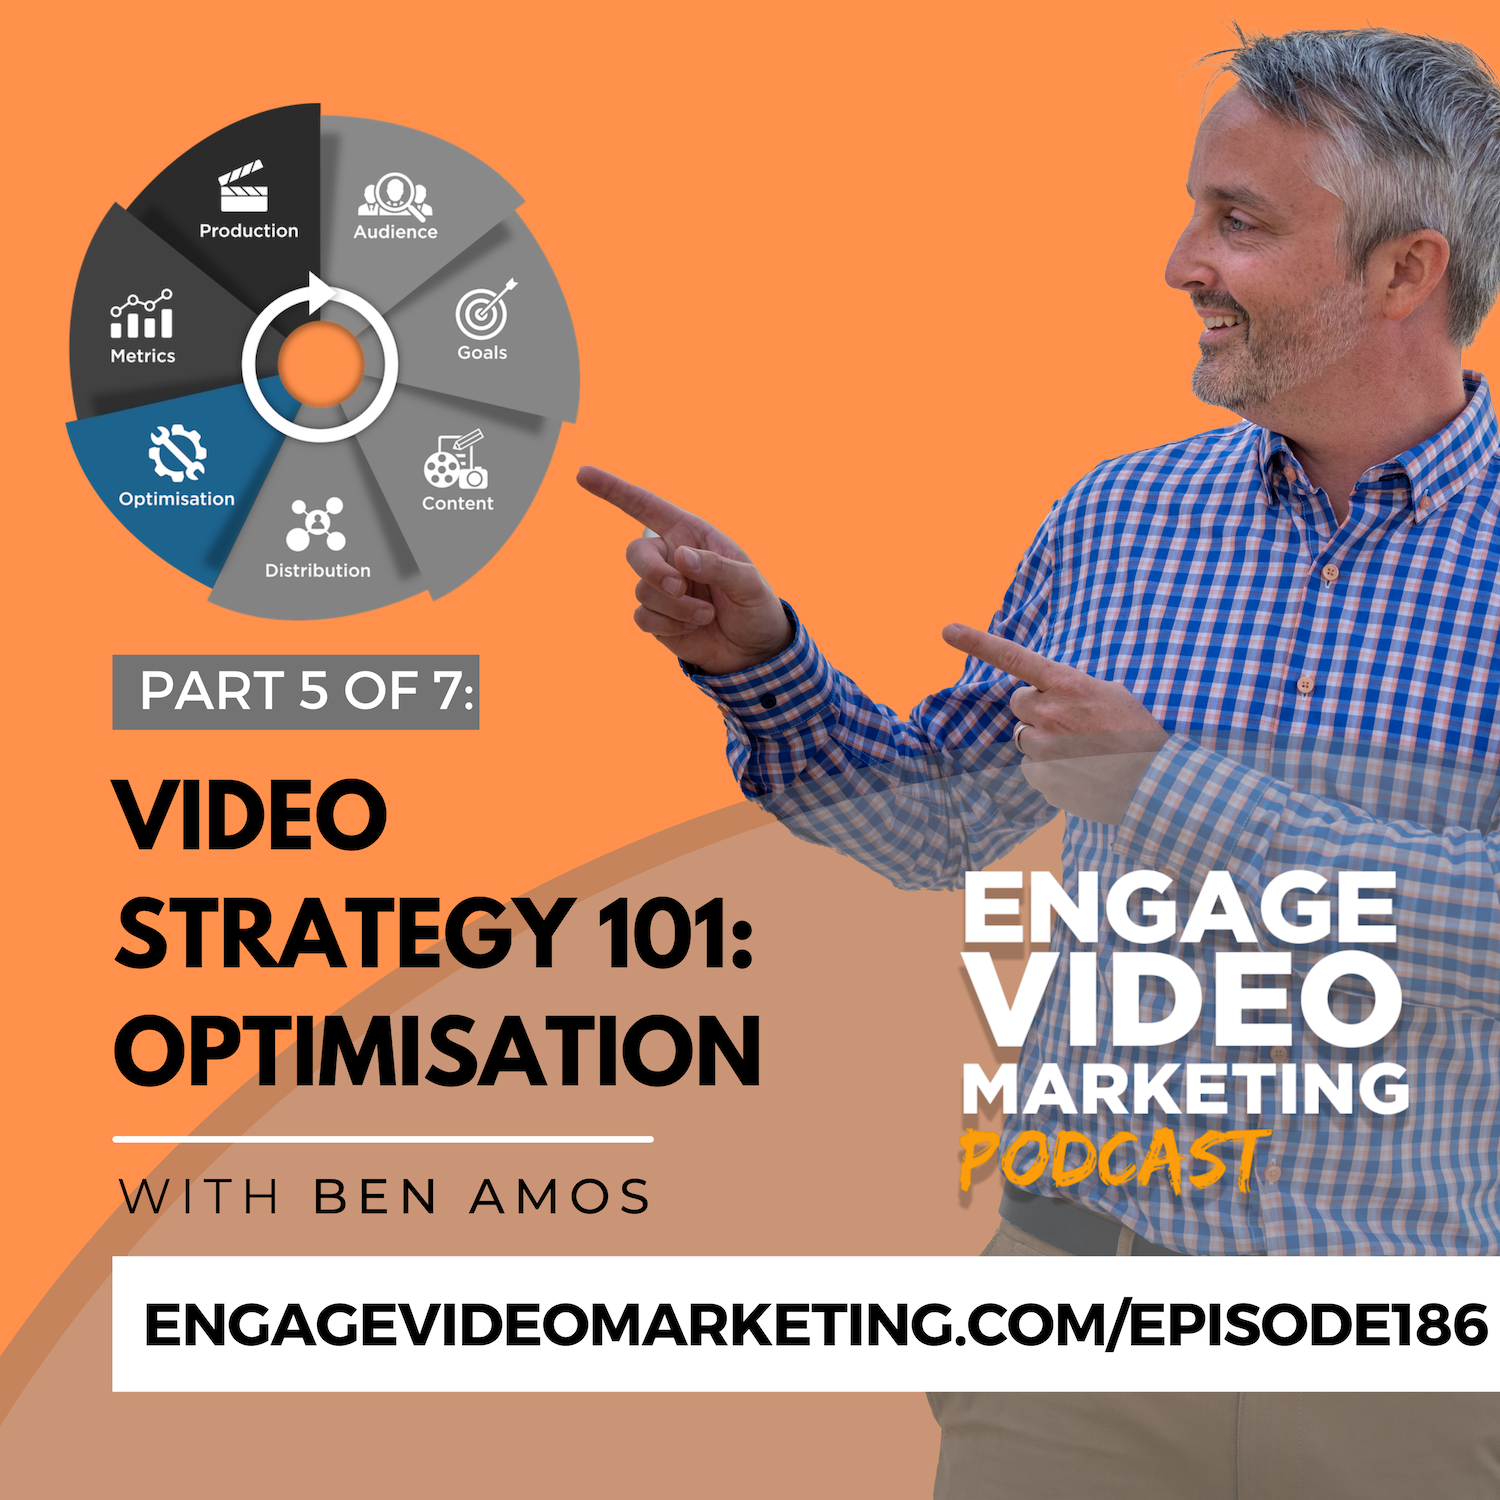 Video Strategy 101: Optimisation